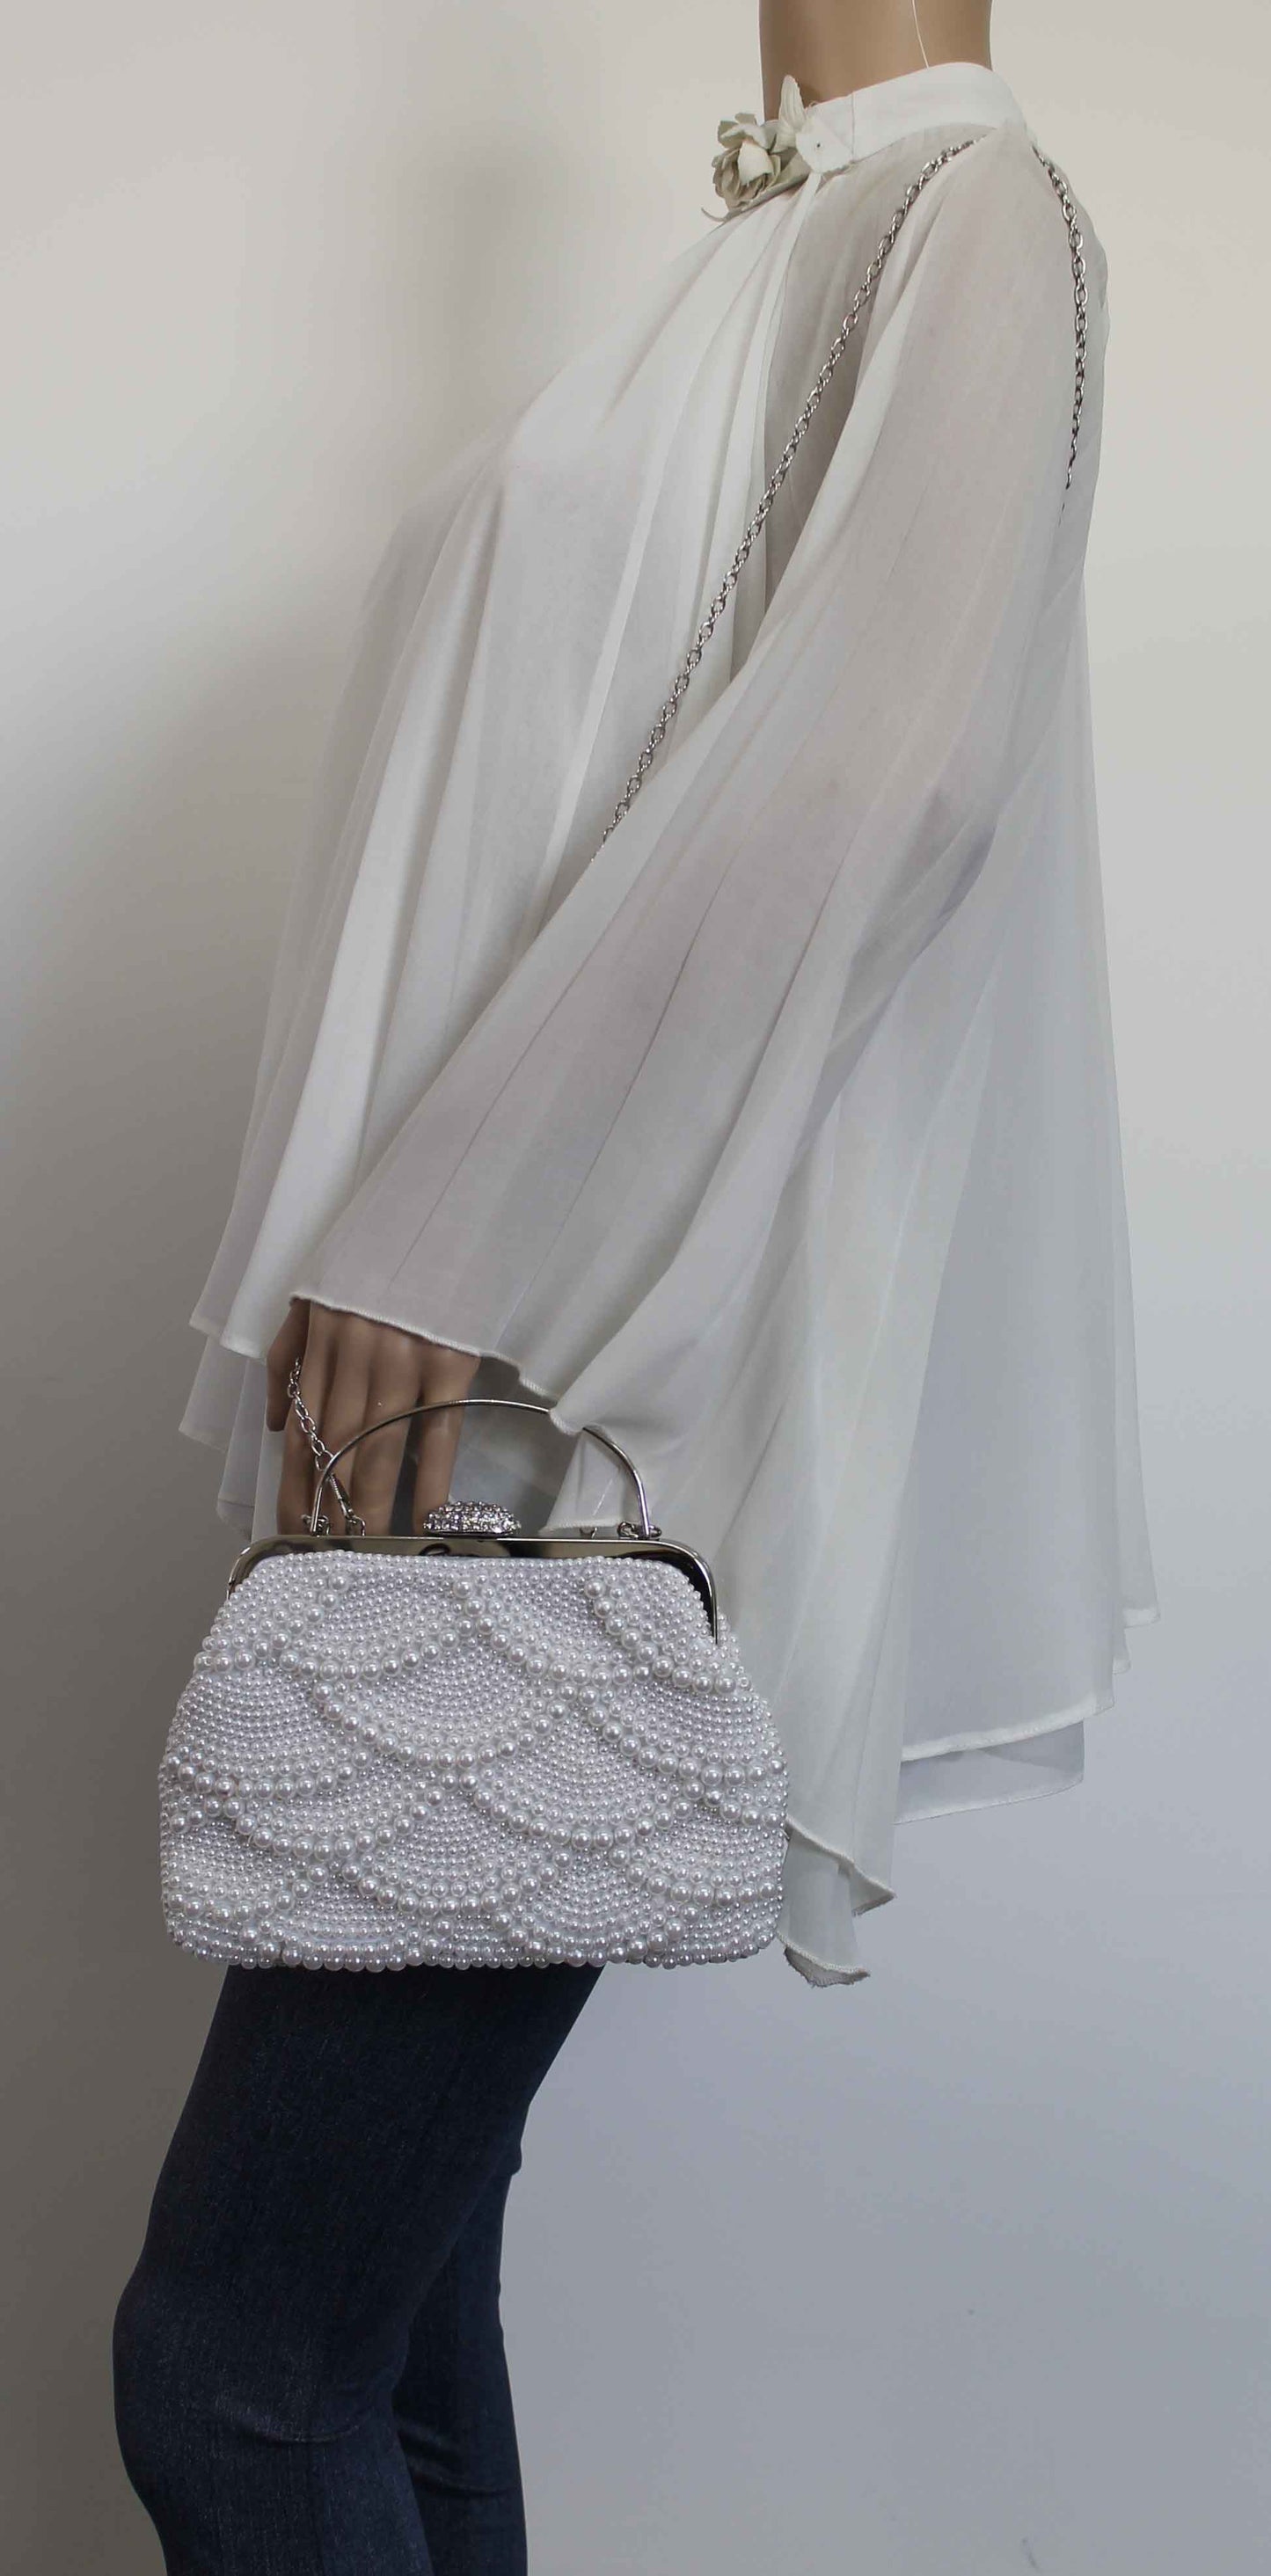 SWANKYSWANS Hailee Faux Pearl Detail Clutch Bag White Cute Cheap Clutch Bag For Weddings School and Work